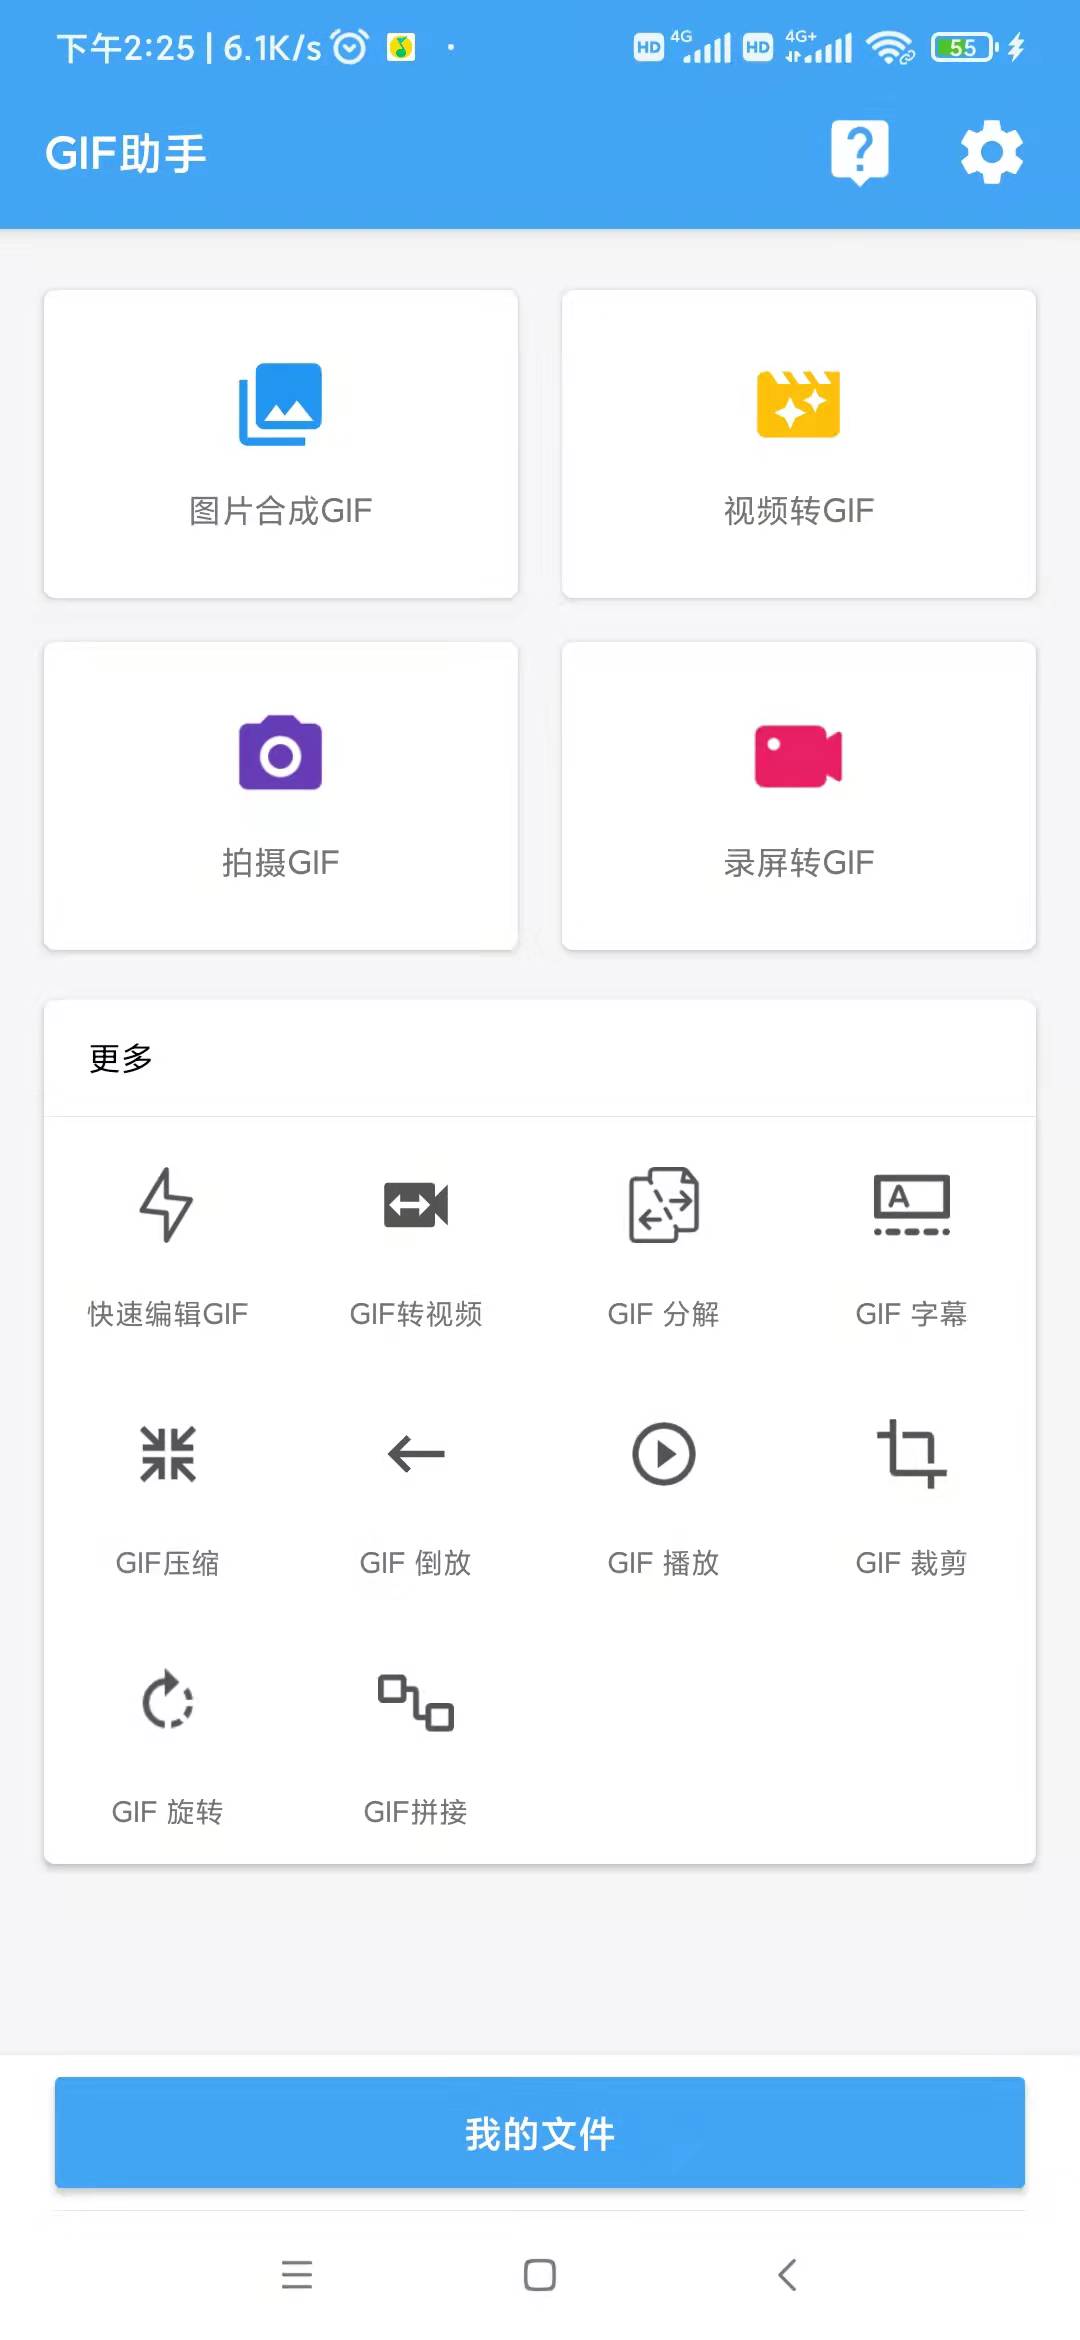 Android GIF助手3.4.9 破解版-盾给网络dungei.cc-dungei.com域名已更换